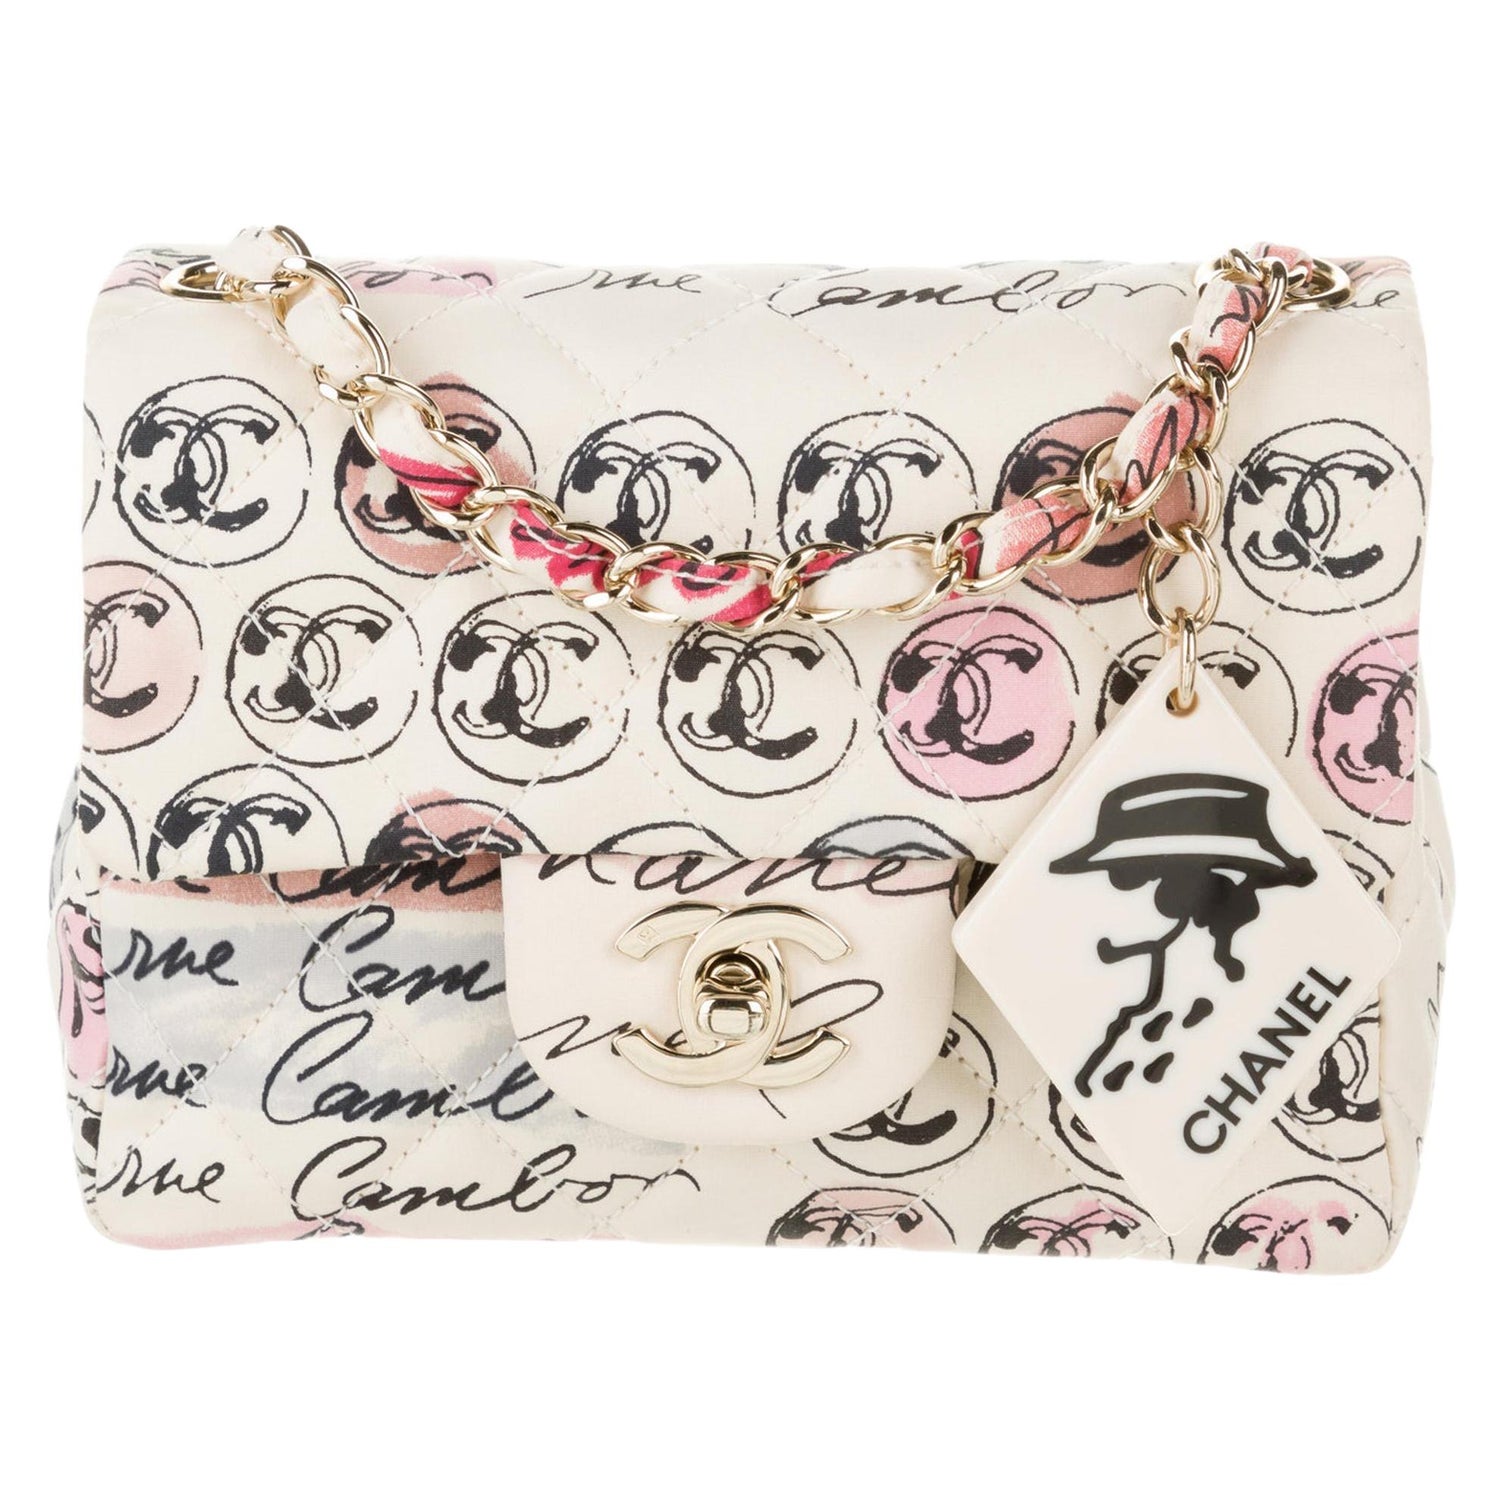 Chanel 2015 Paris Dubai Night Gas Tank Jerry Can Statement Bag